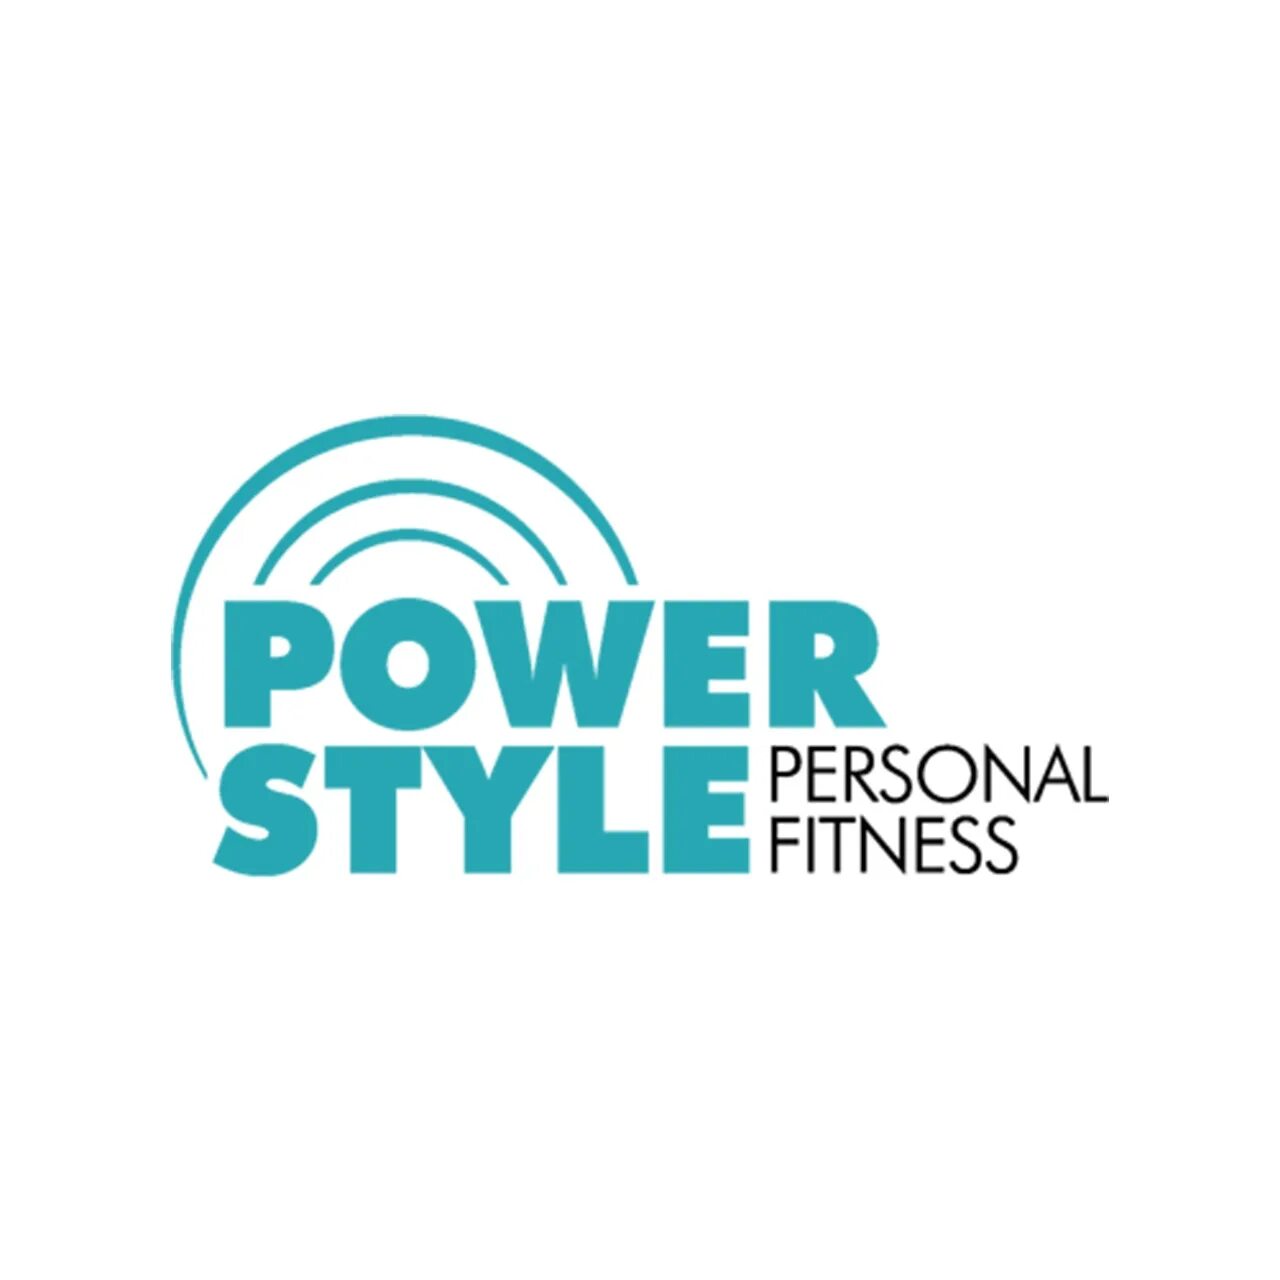 Power Style. Power-Style в городе Москва логотип. Powered styling. Personal Power.